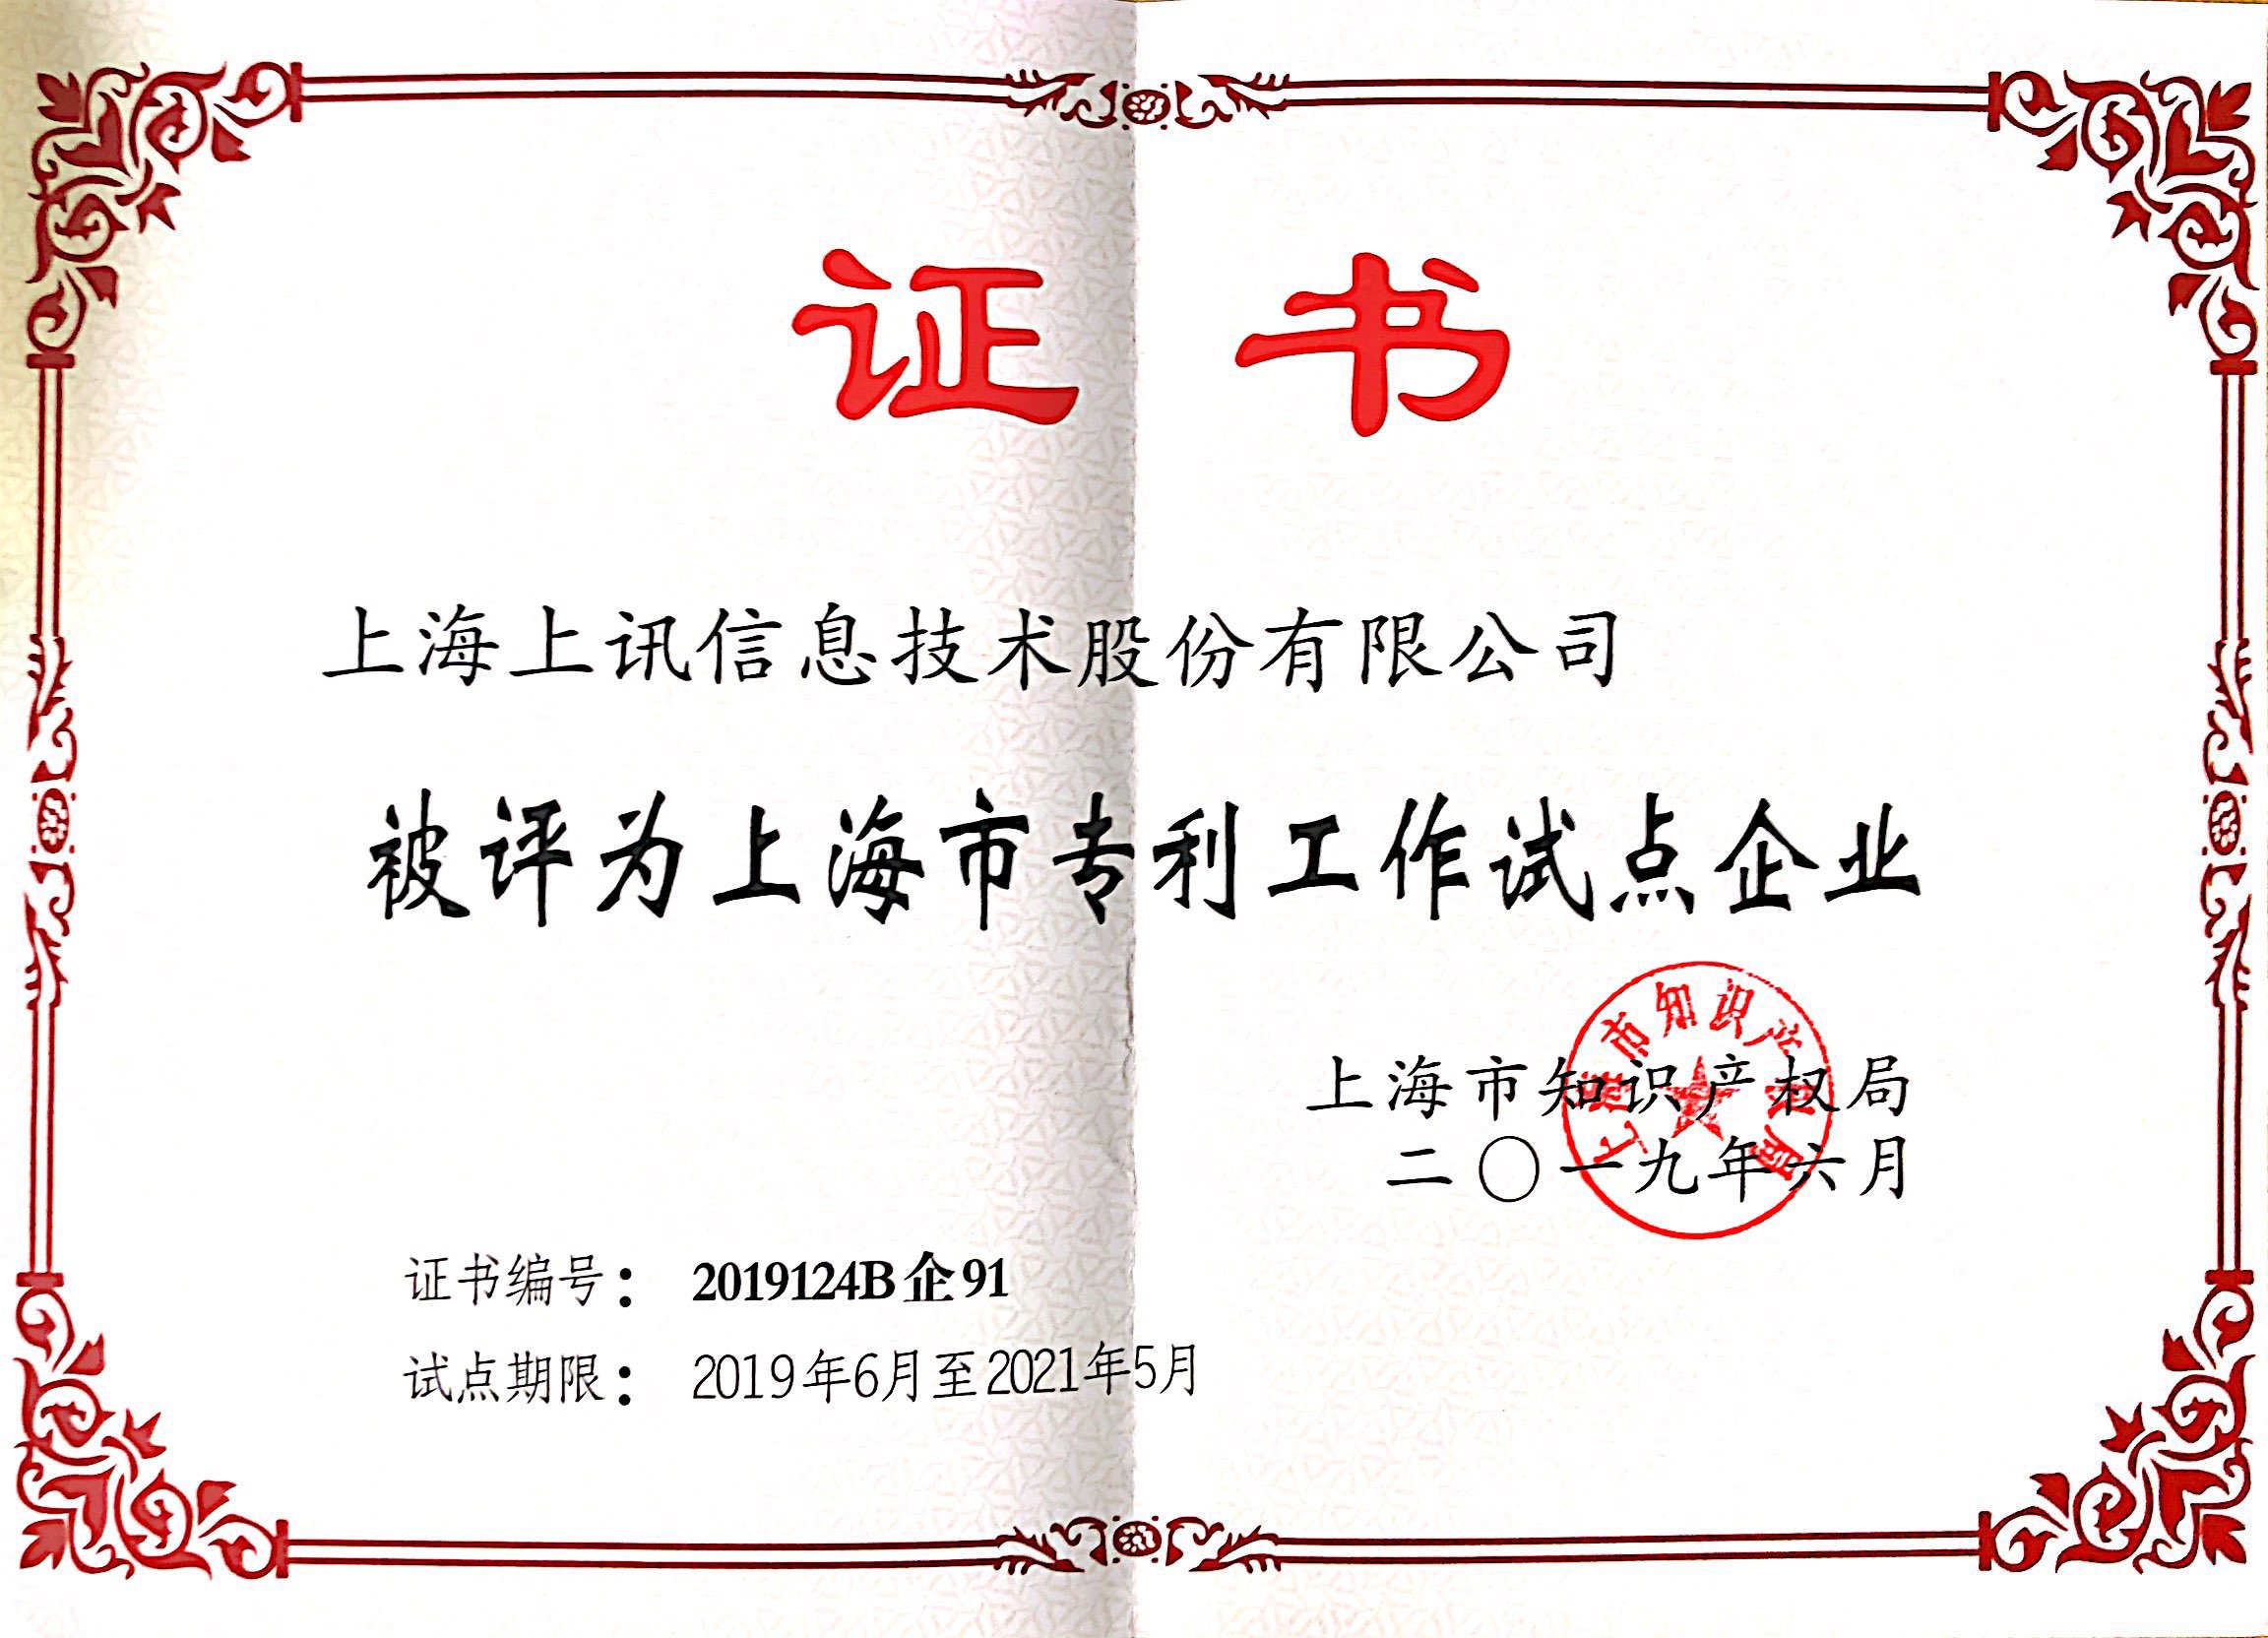 Shanghai Patent Pilot Enterprise Certificate